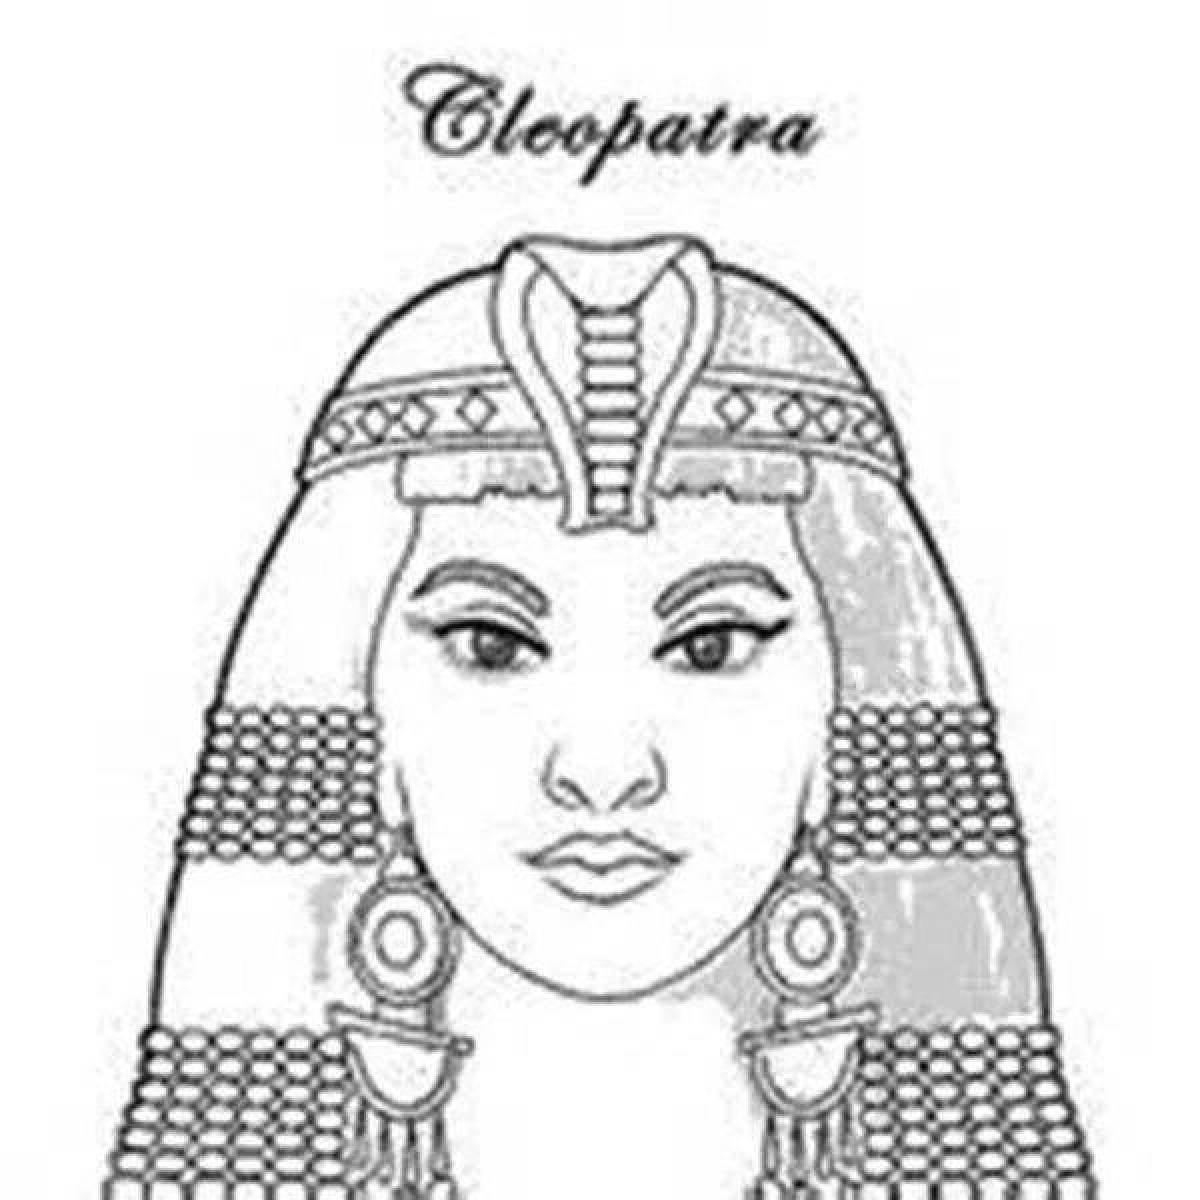 Cleopatra's generous coloring book